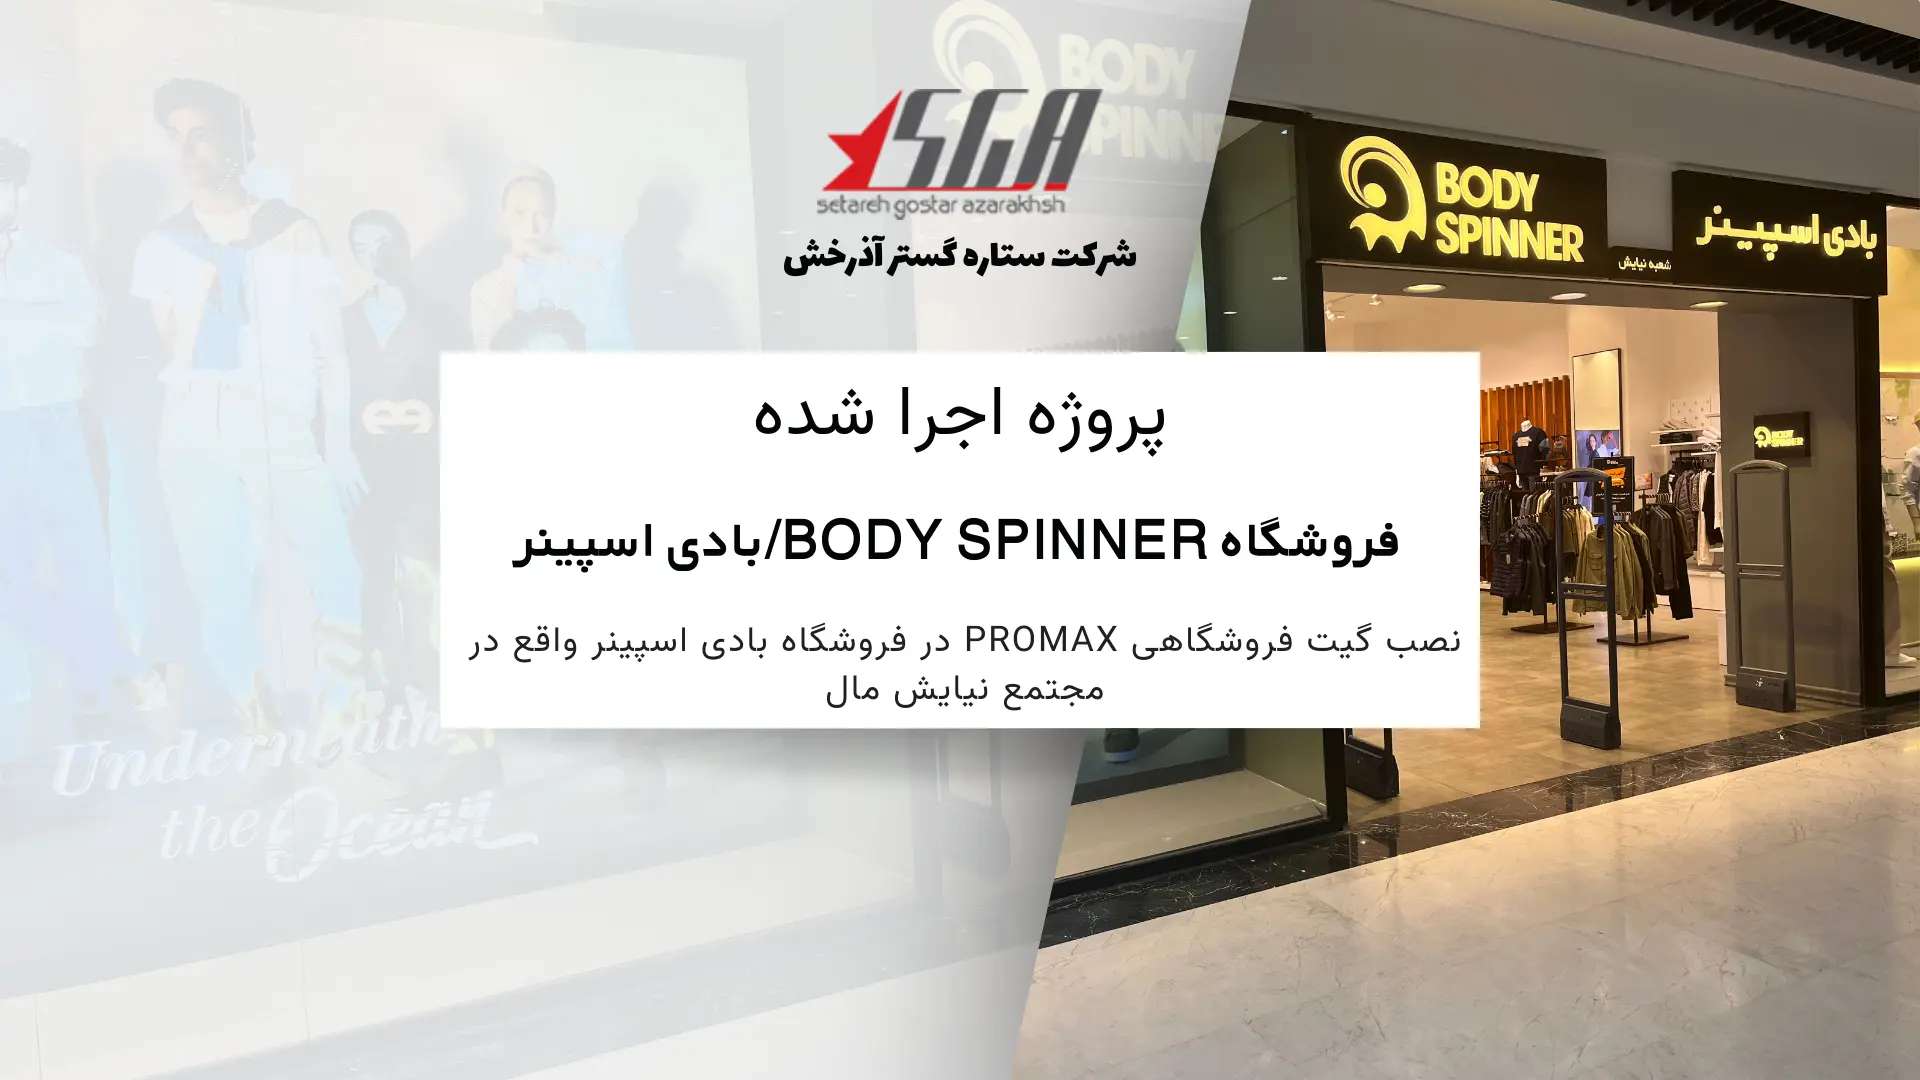 فروشگاه Body spinner/بادی اسپینر